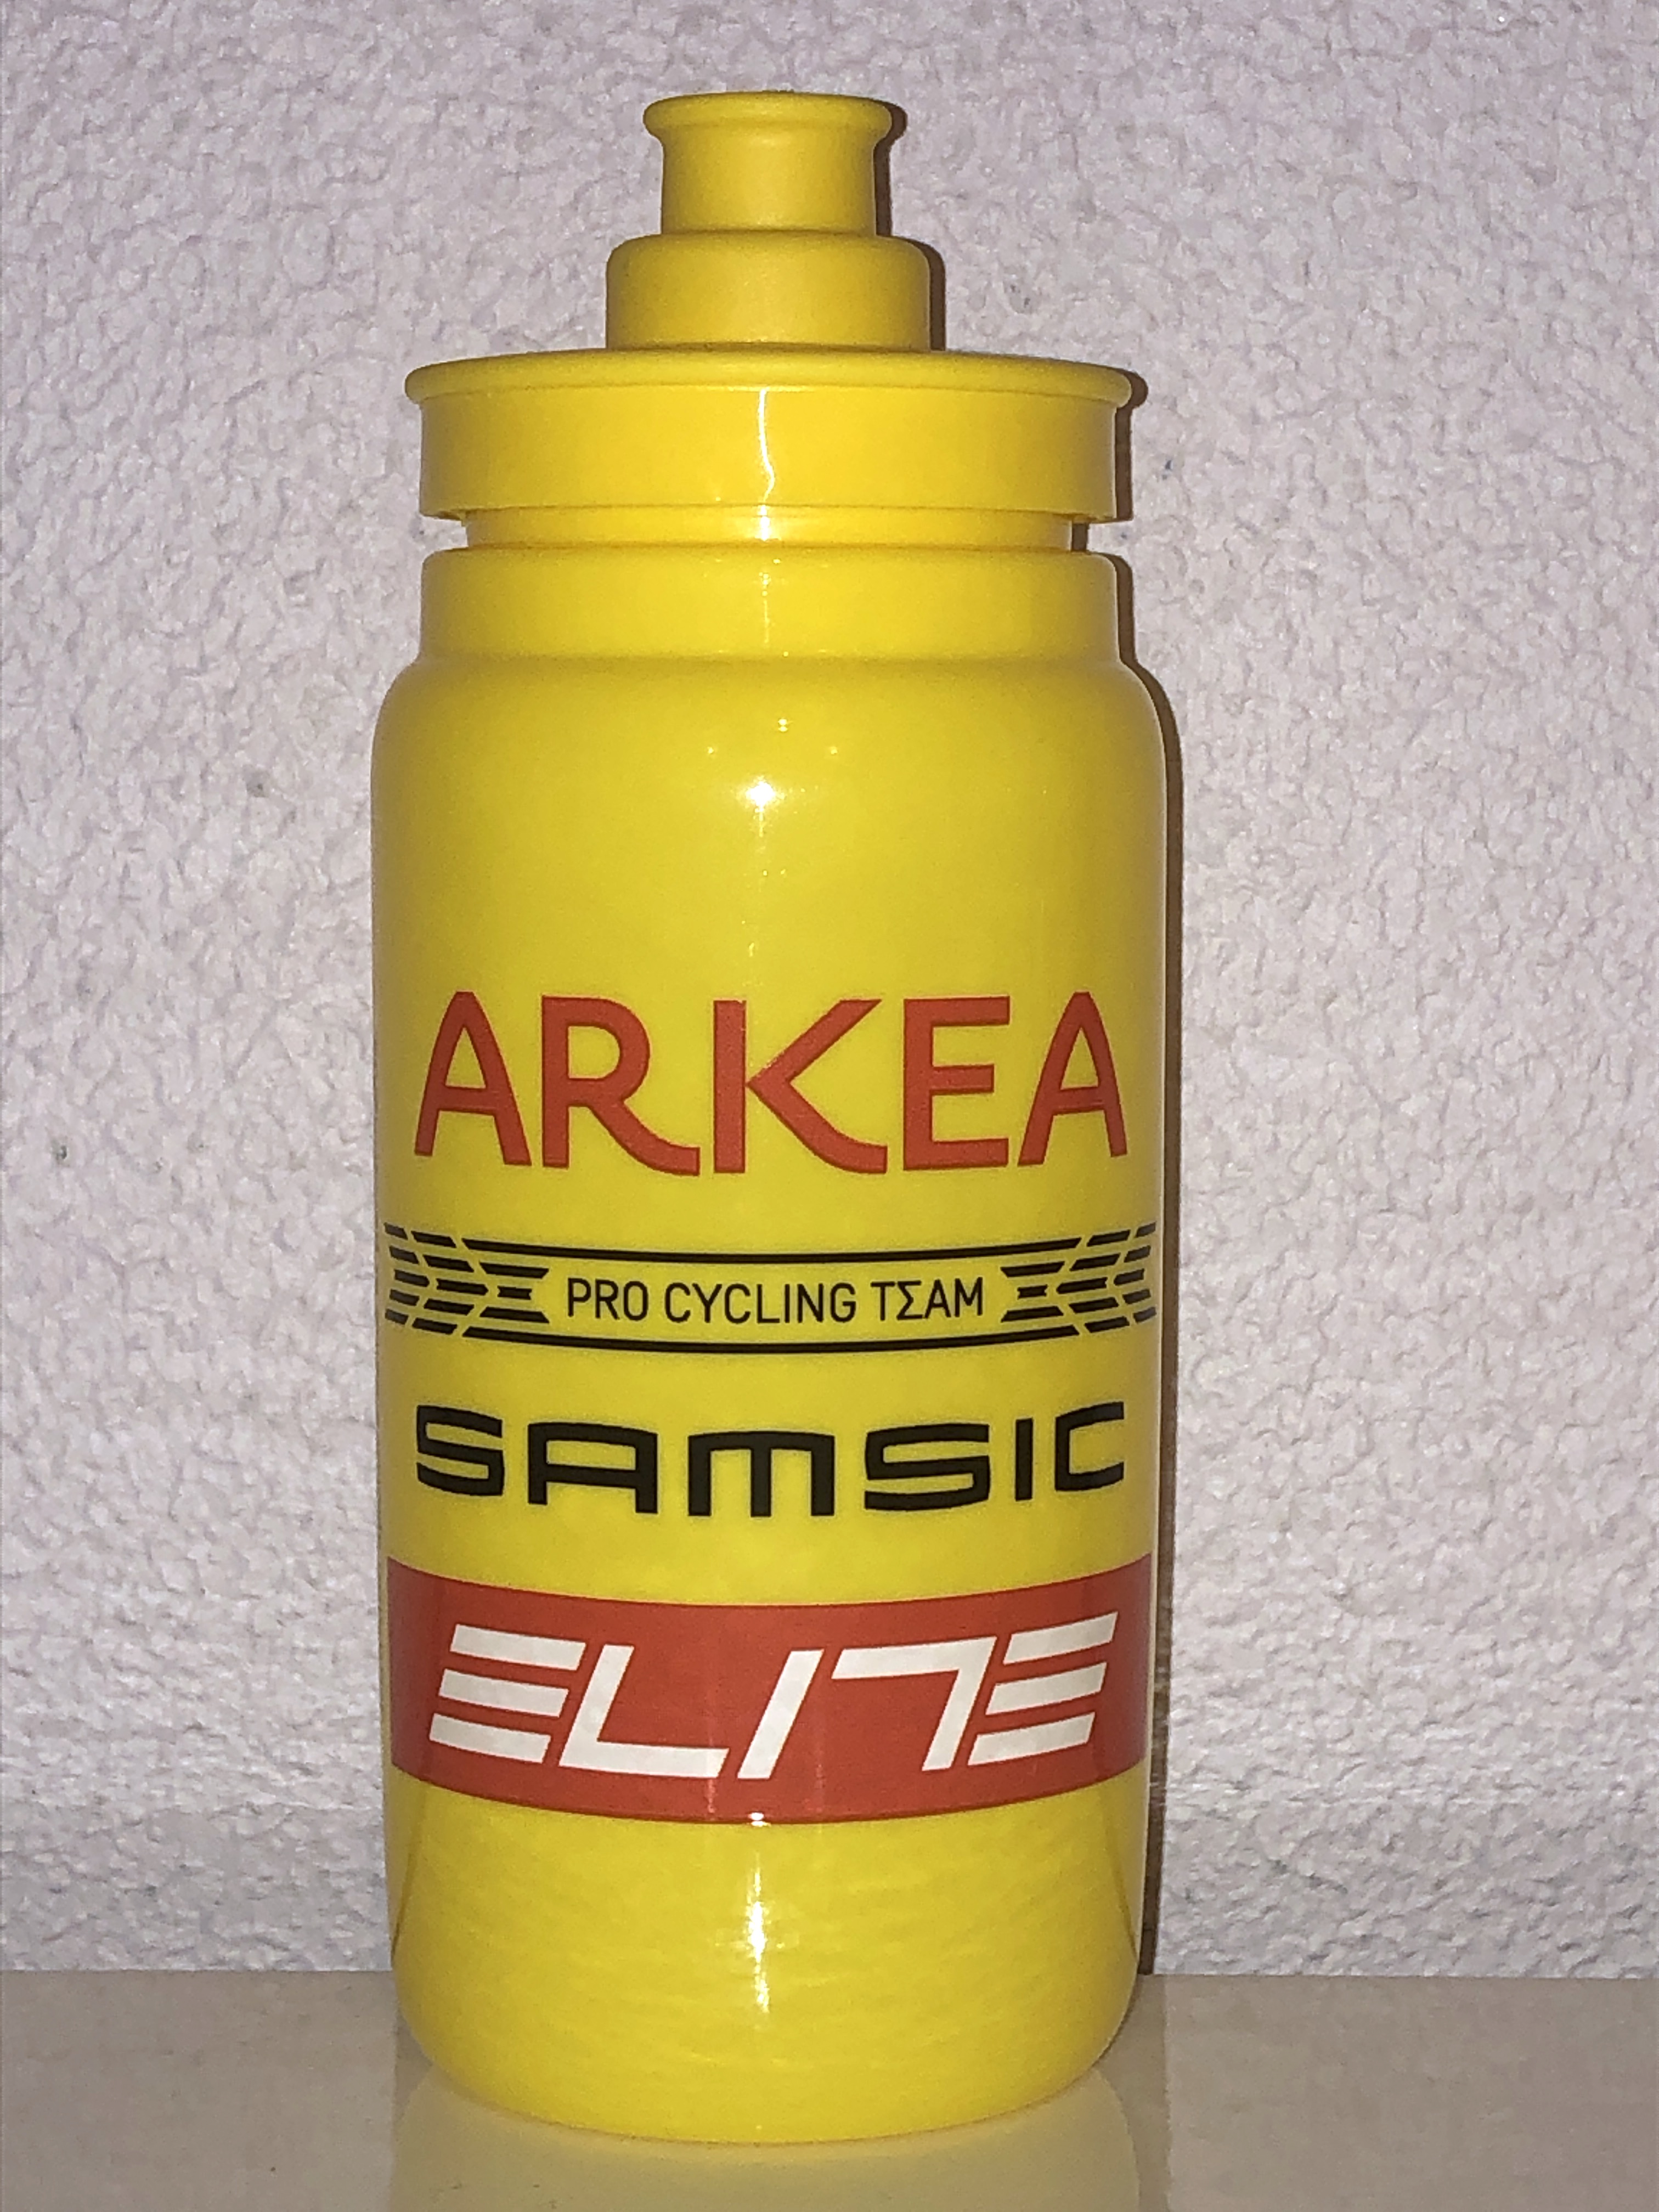 Elite Fly - Arkea Samsic Pro Cycling Team (édition limitée TDF) - 2020